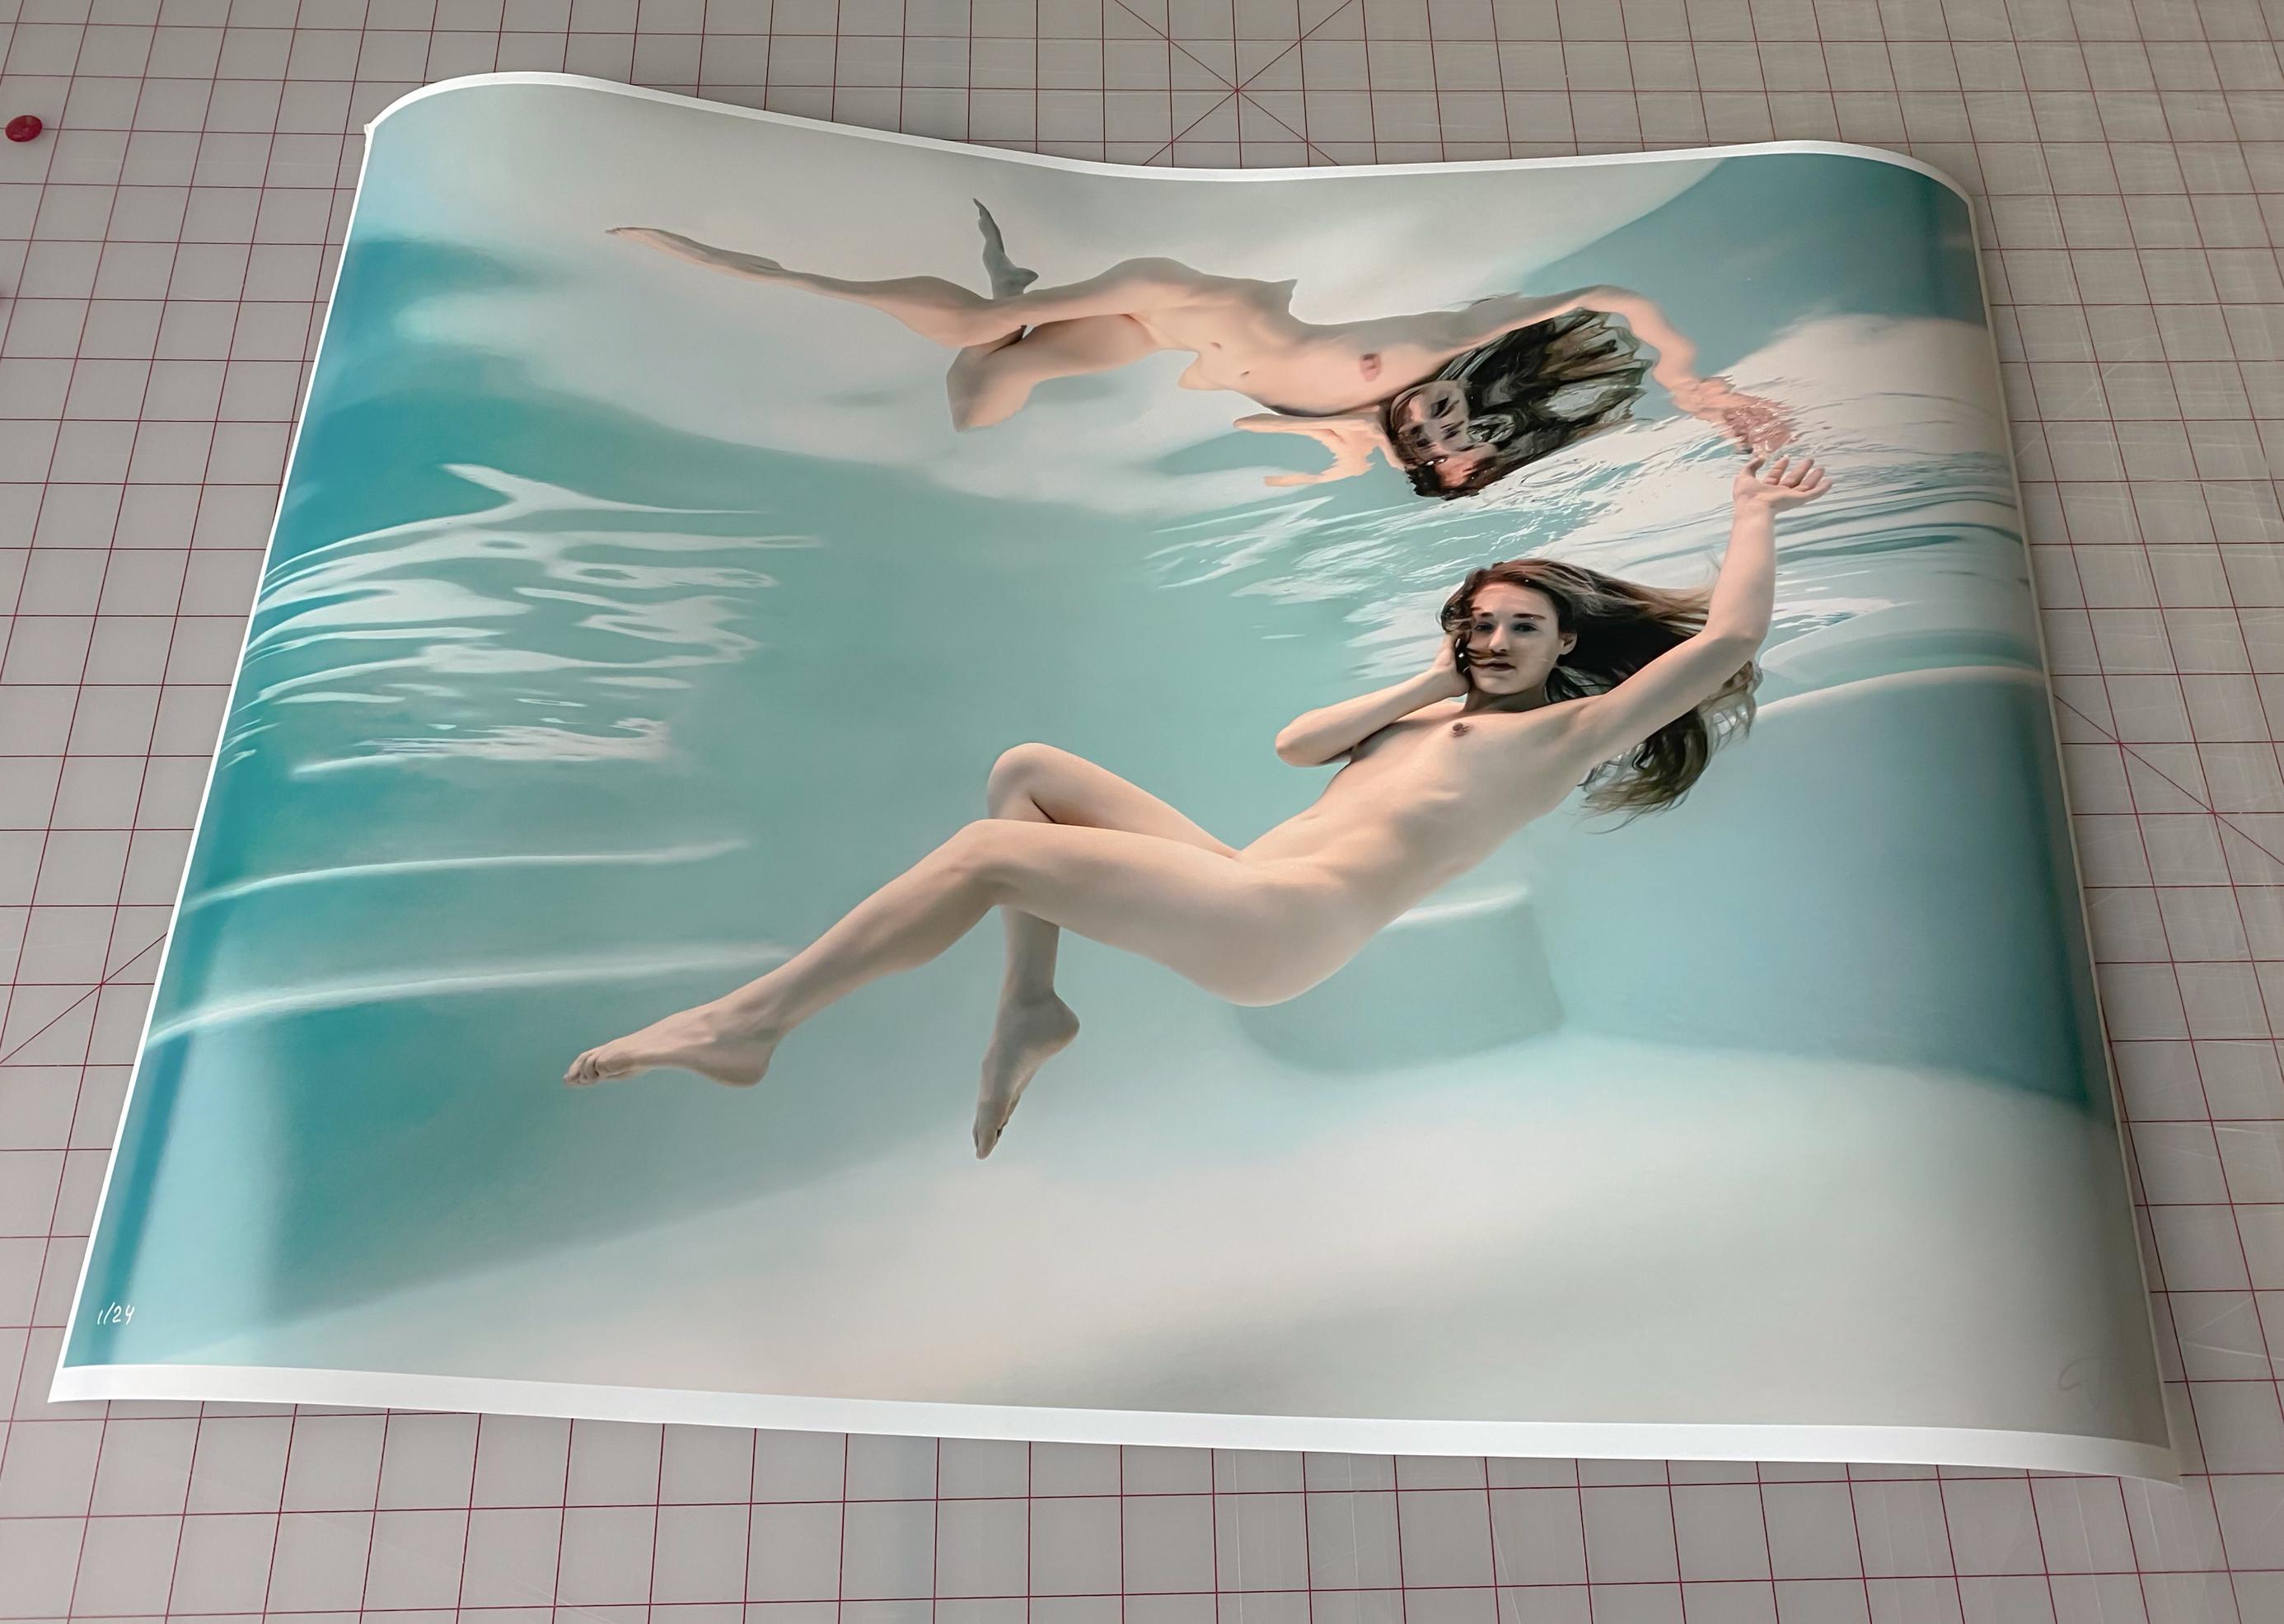 Zero Gravity Lounge III - underwater nude photograph - archival pigment 18x24